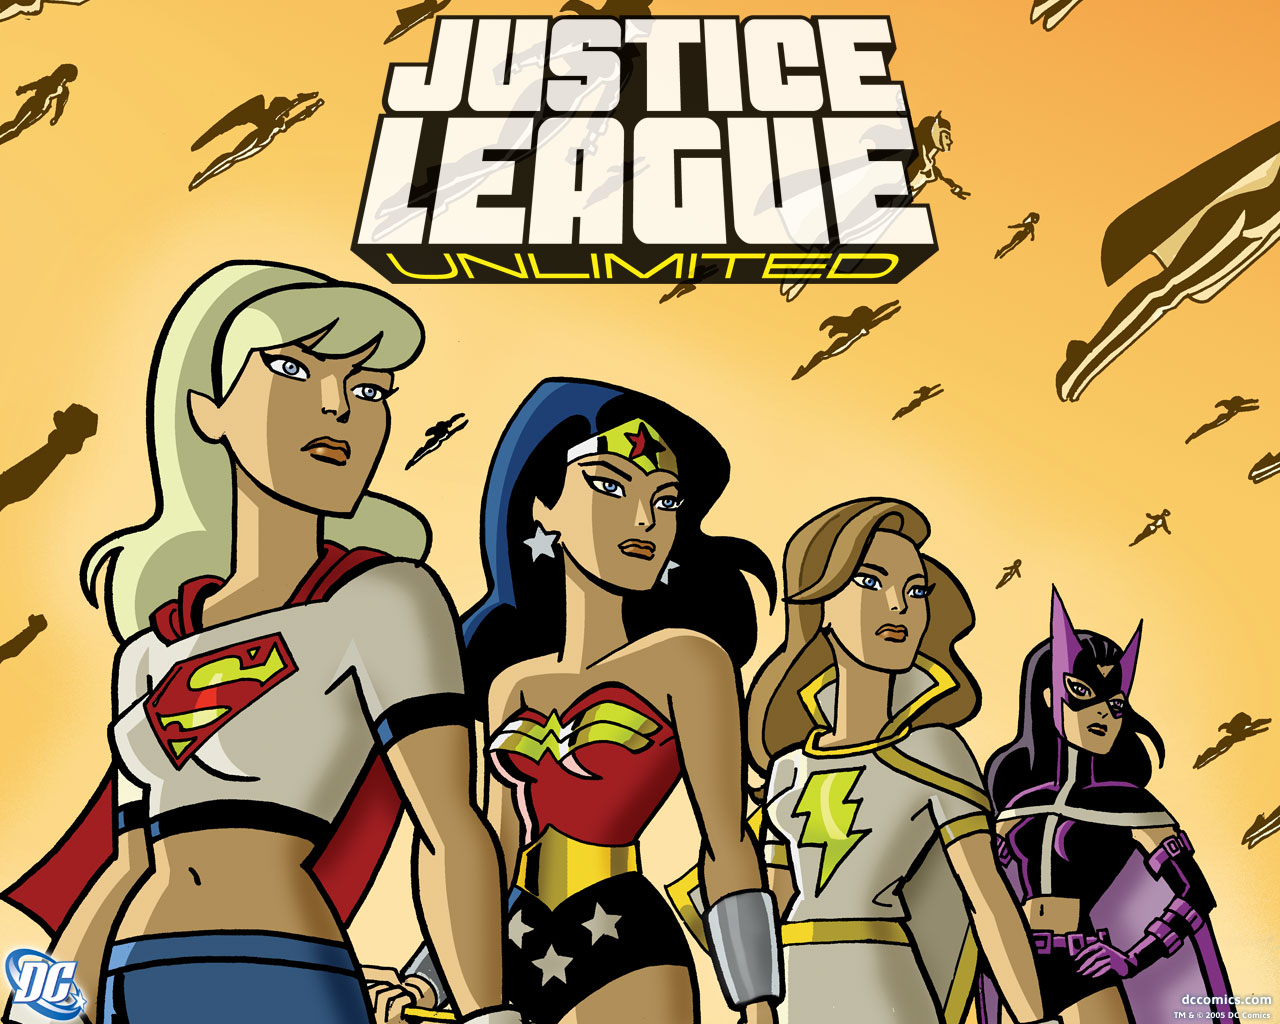 Justice League: Unlimited #10